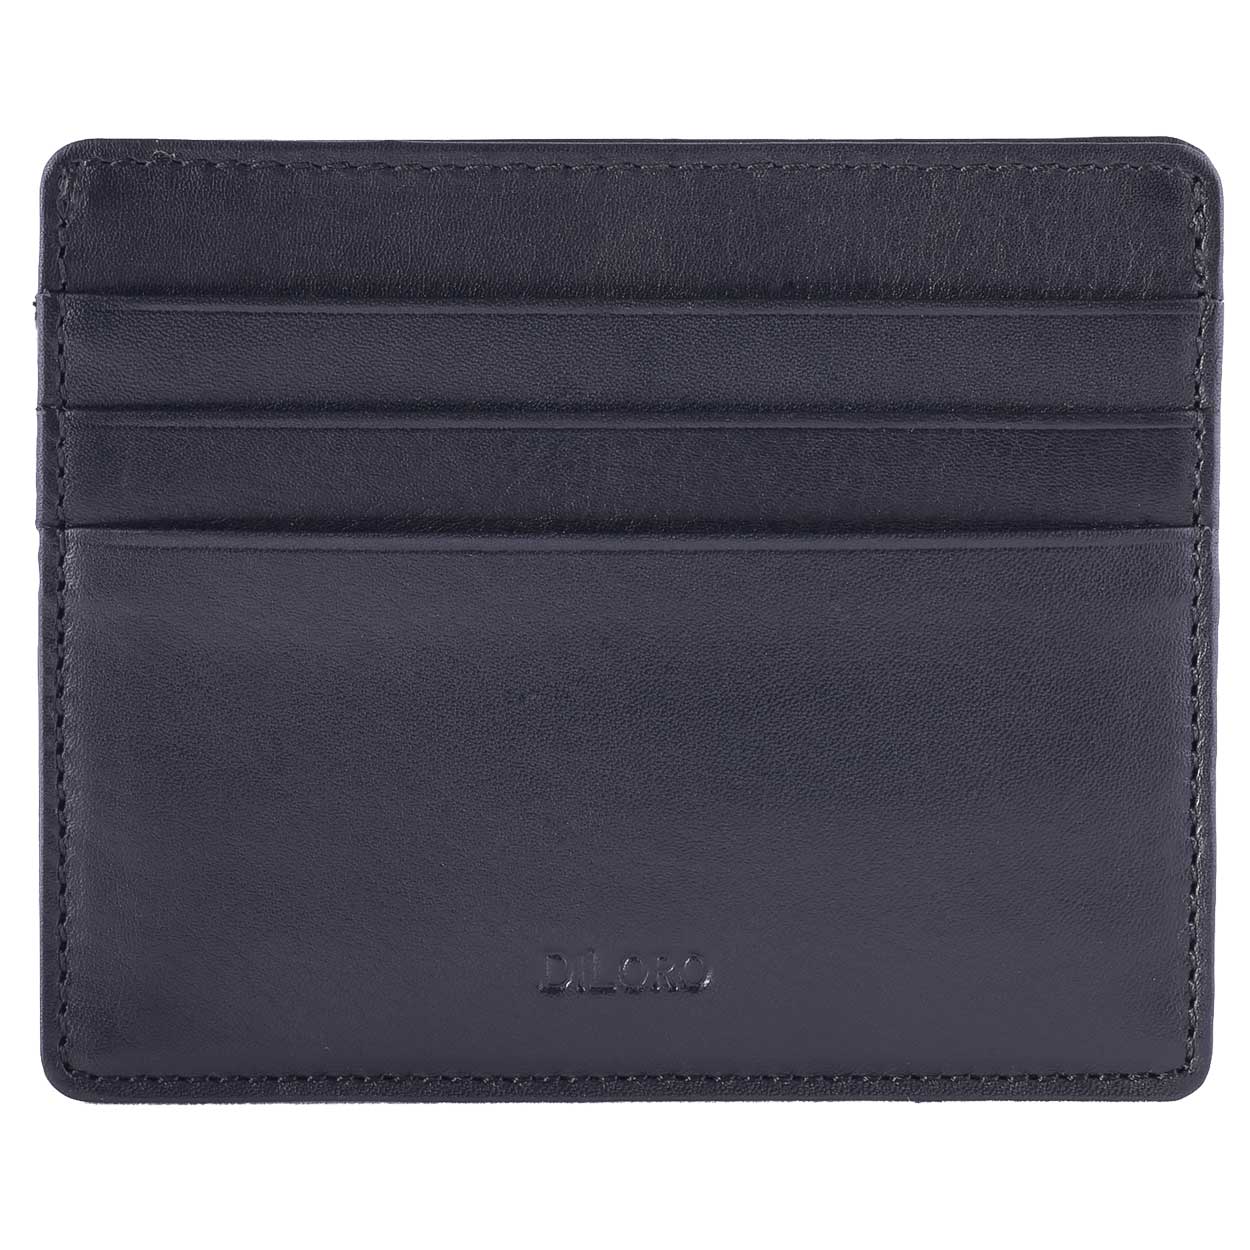 Black Nappa DiLoro Leather Ultra Slim RFID Blocking Minimalist Travel Card Wallet - Front View (Empty)